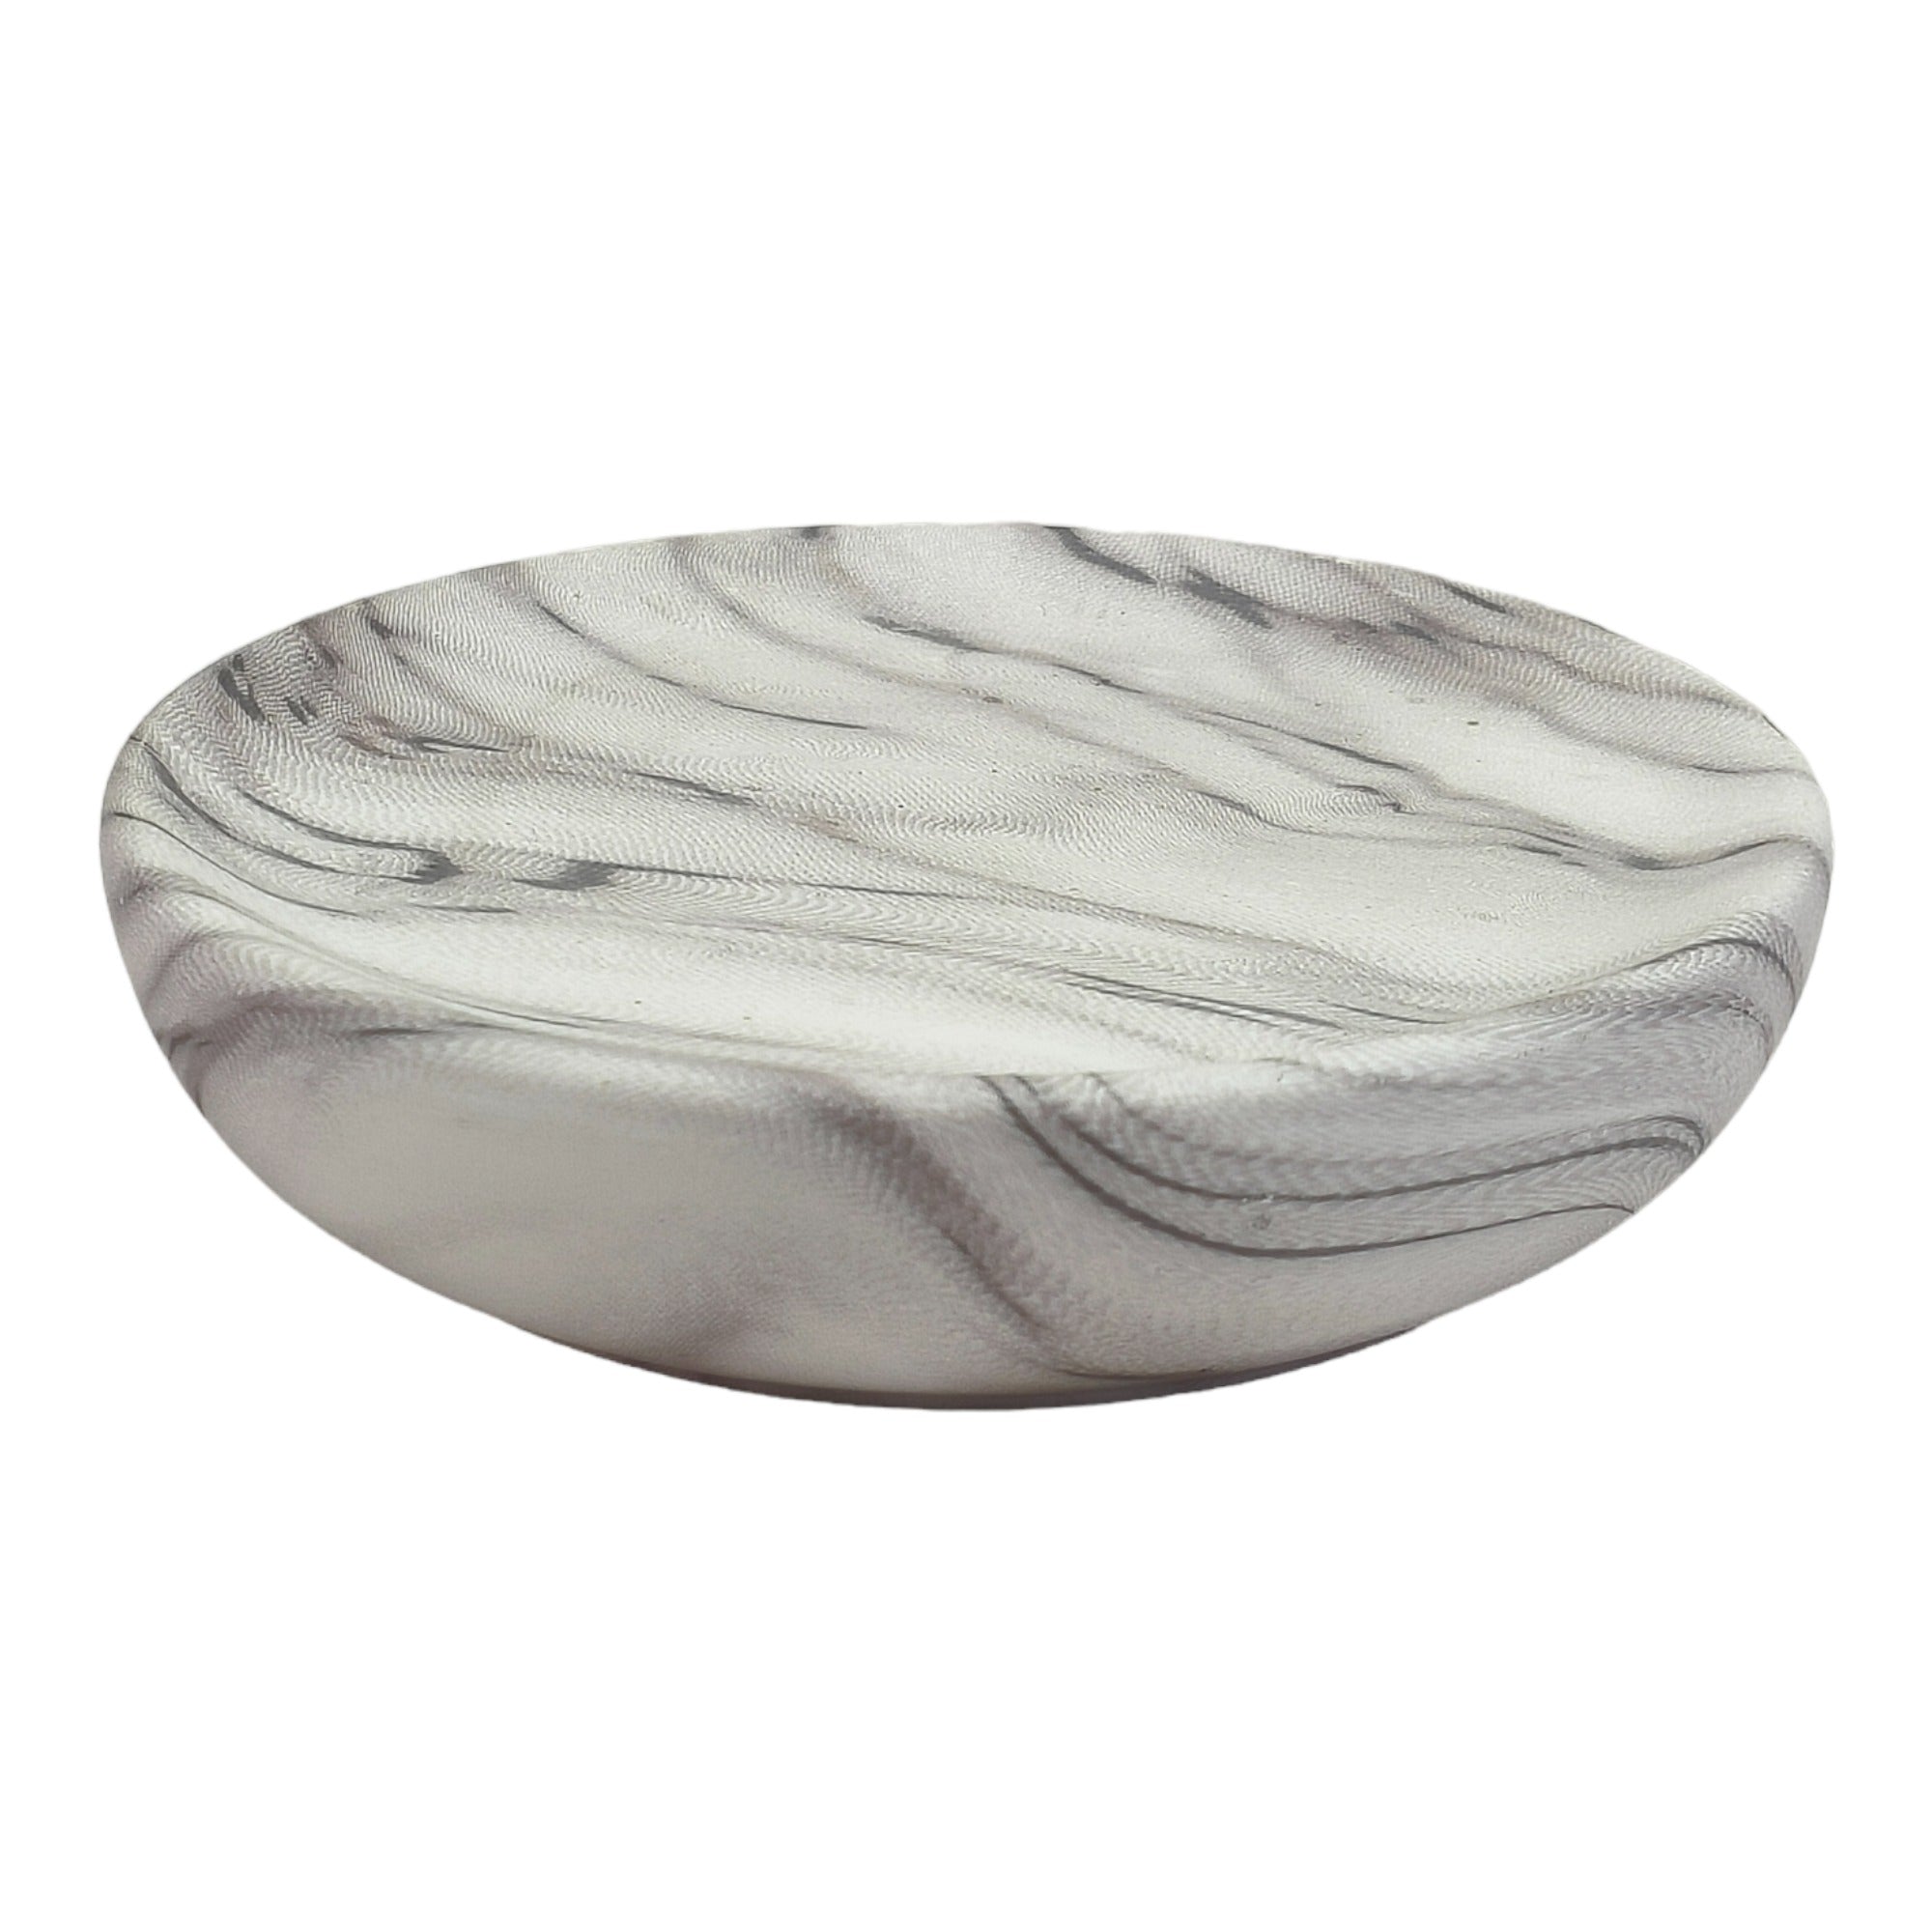 Ceramic Soap Dish Set of 1 Bathroom Accessories for Home (C1099)